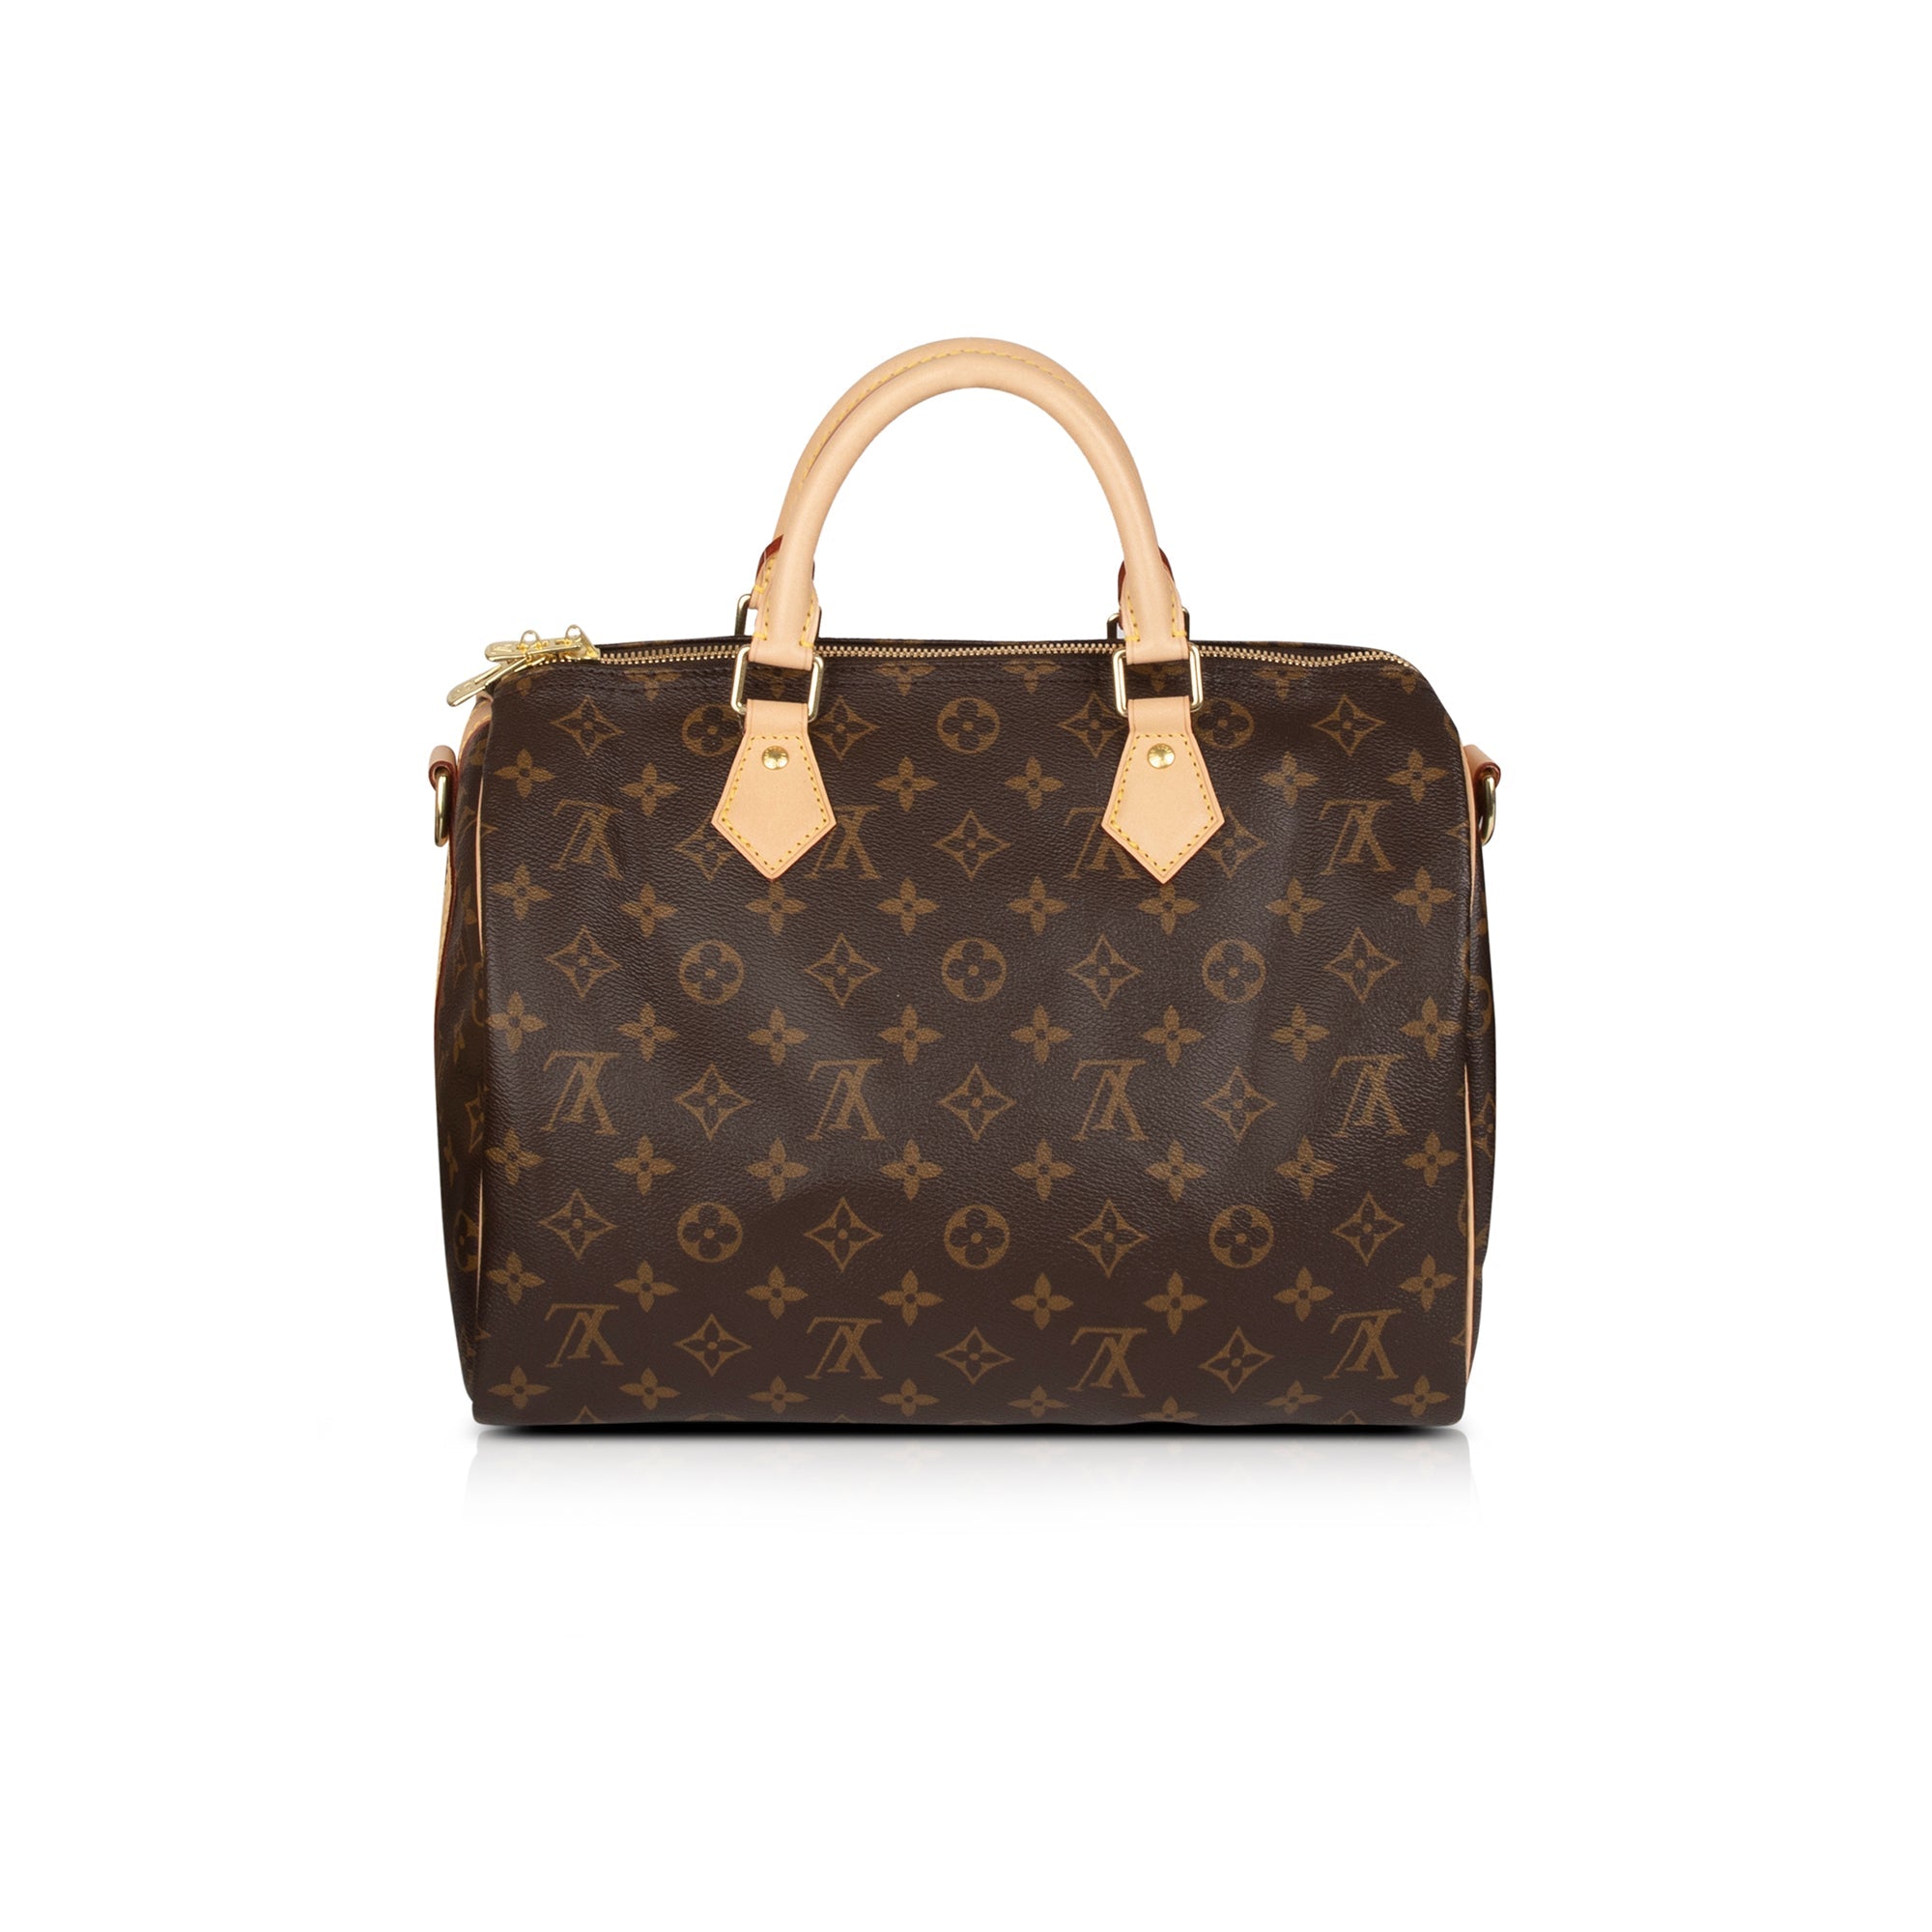 RECEIPT 2022 Louis Vuitton Monogram Bandouliere Speedy 30 STRAP Bag  $1890+TAX